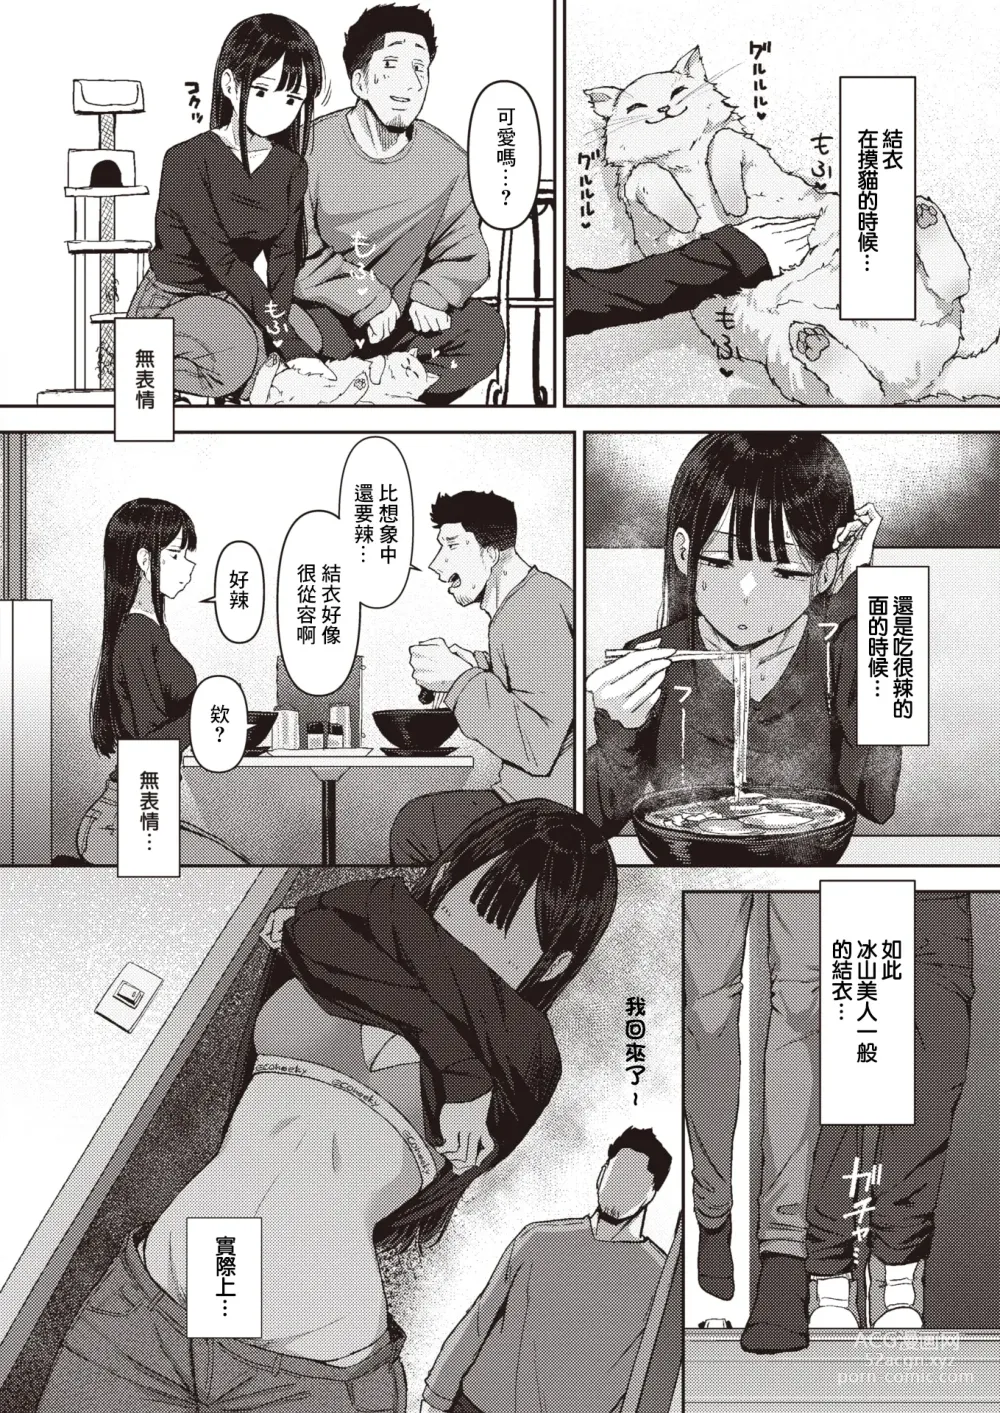 Page 3 of manga Haetete Hoshii.